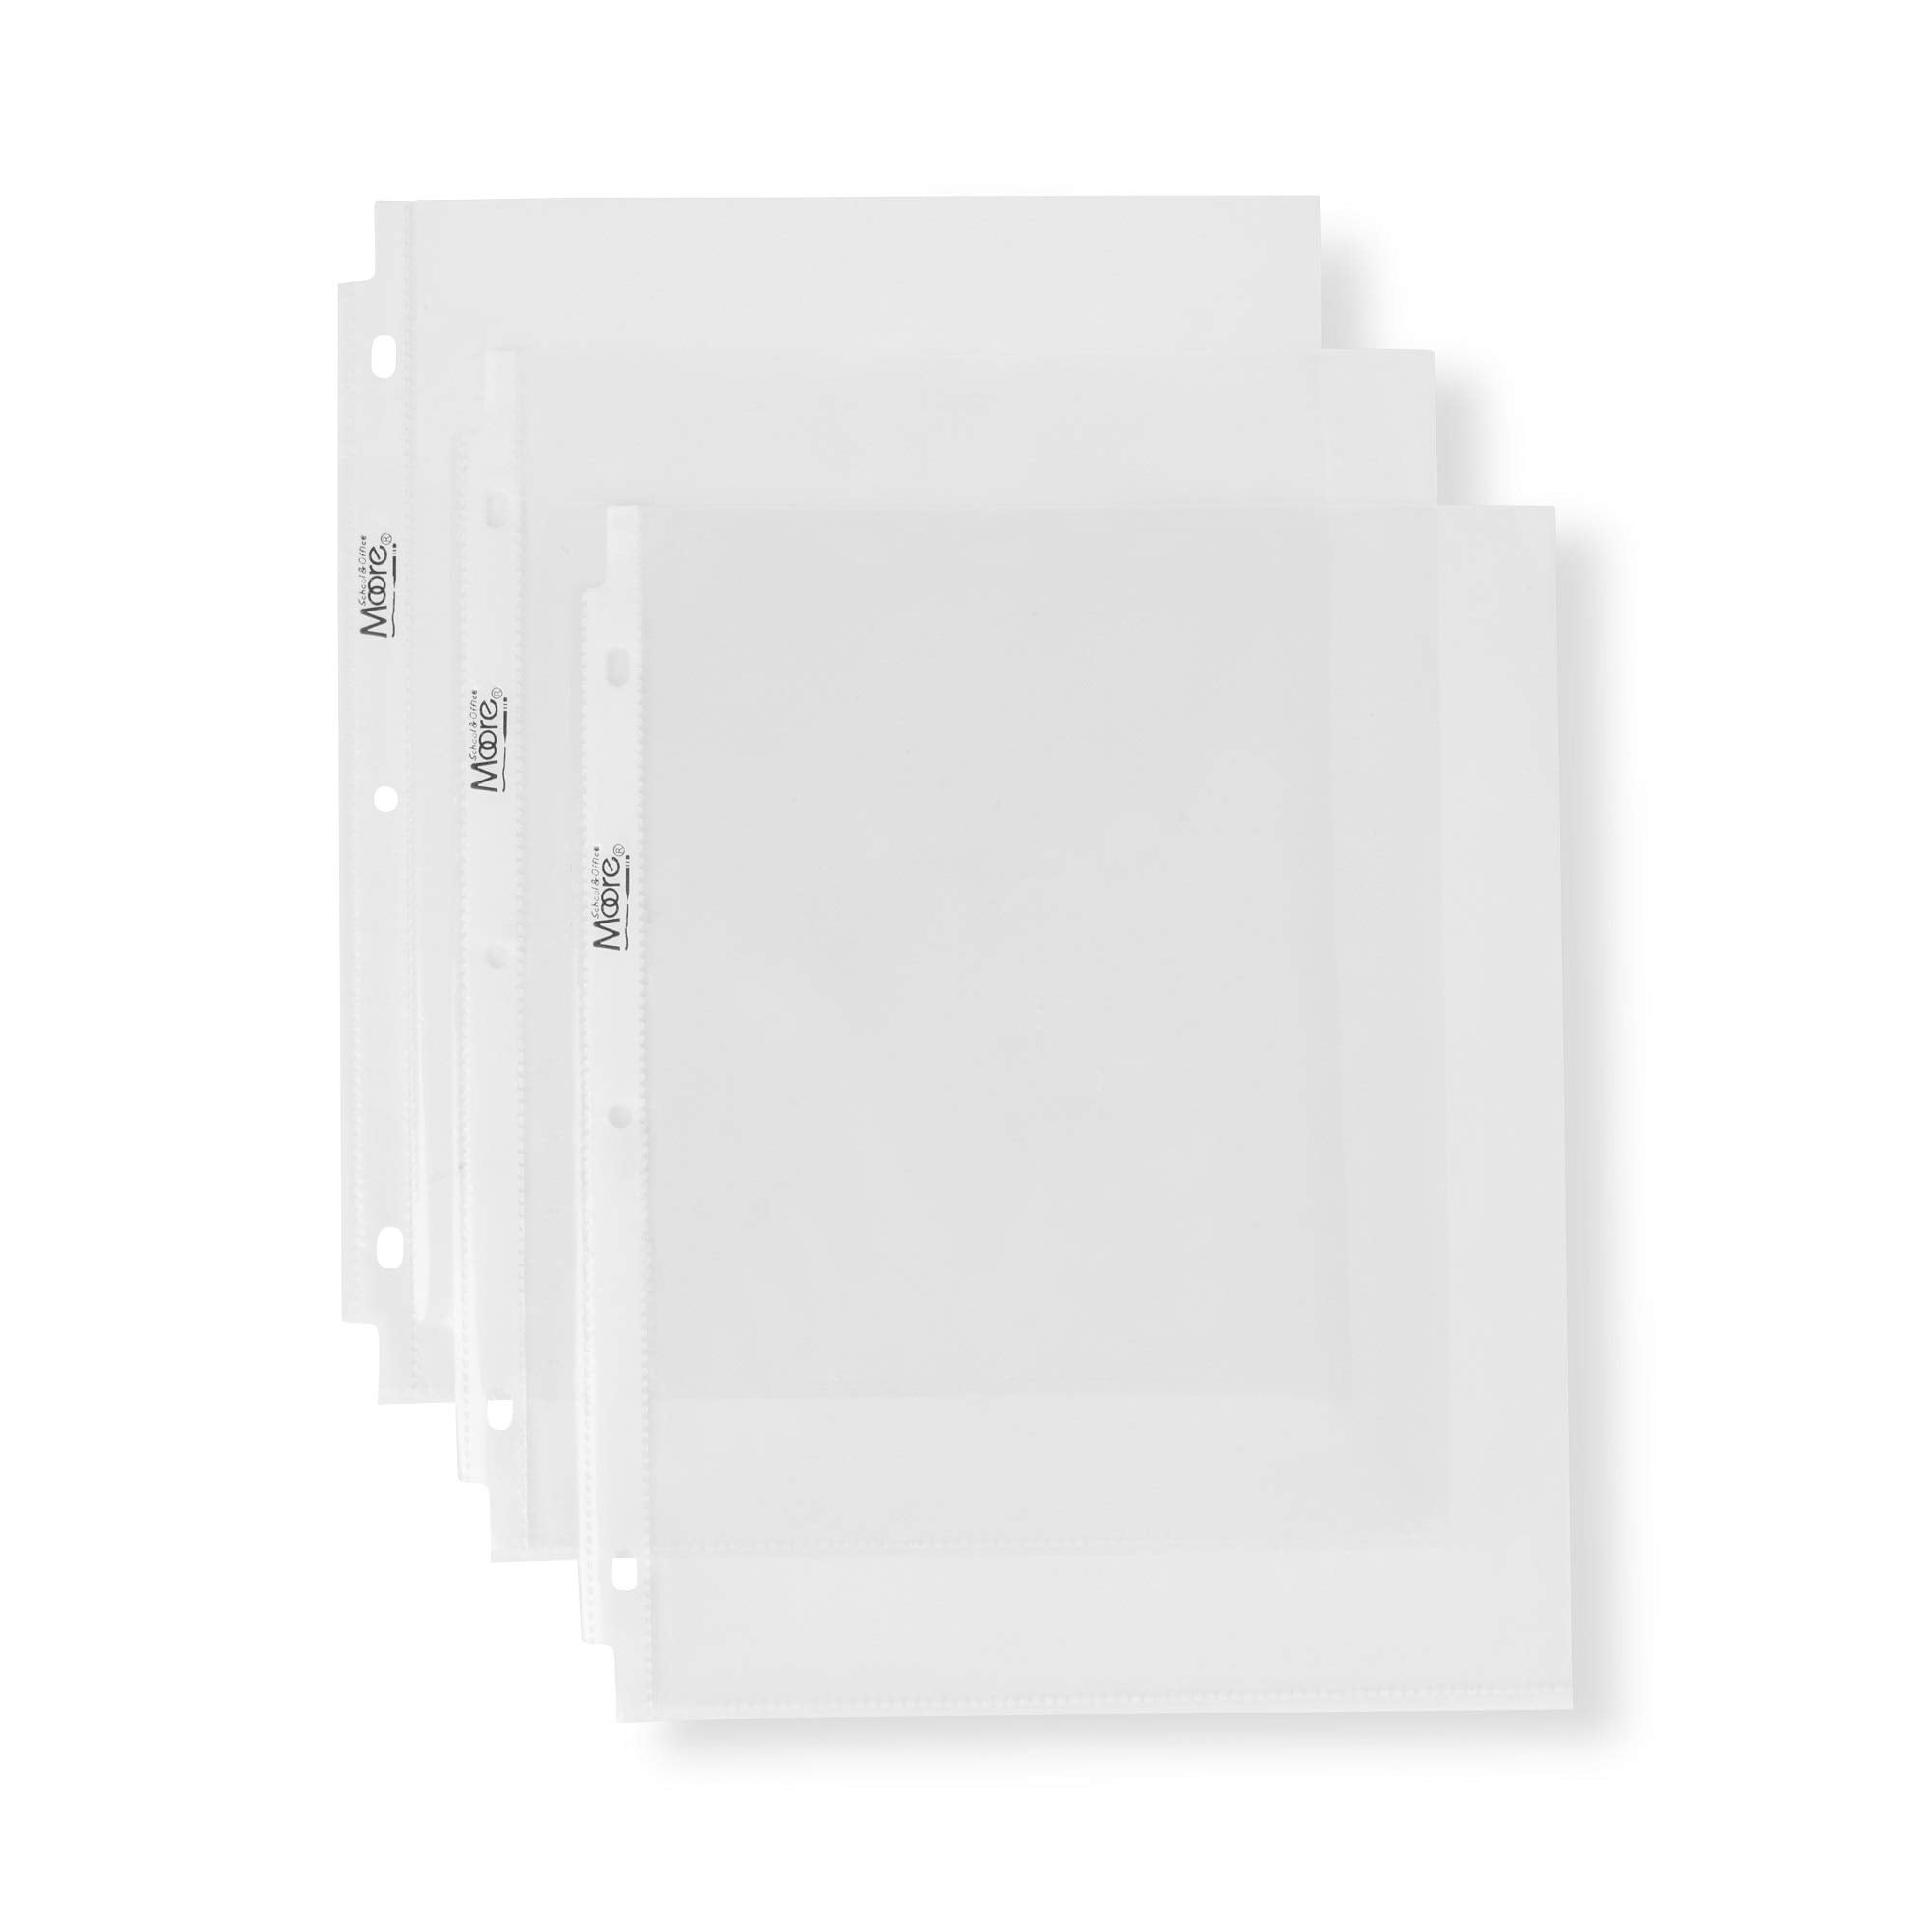  Sooez 30-Pocket Binder with Plastic Sleeves 8.5x11